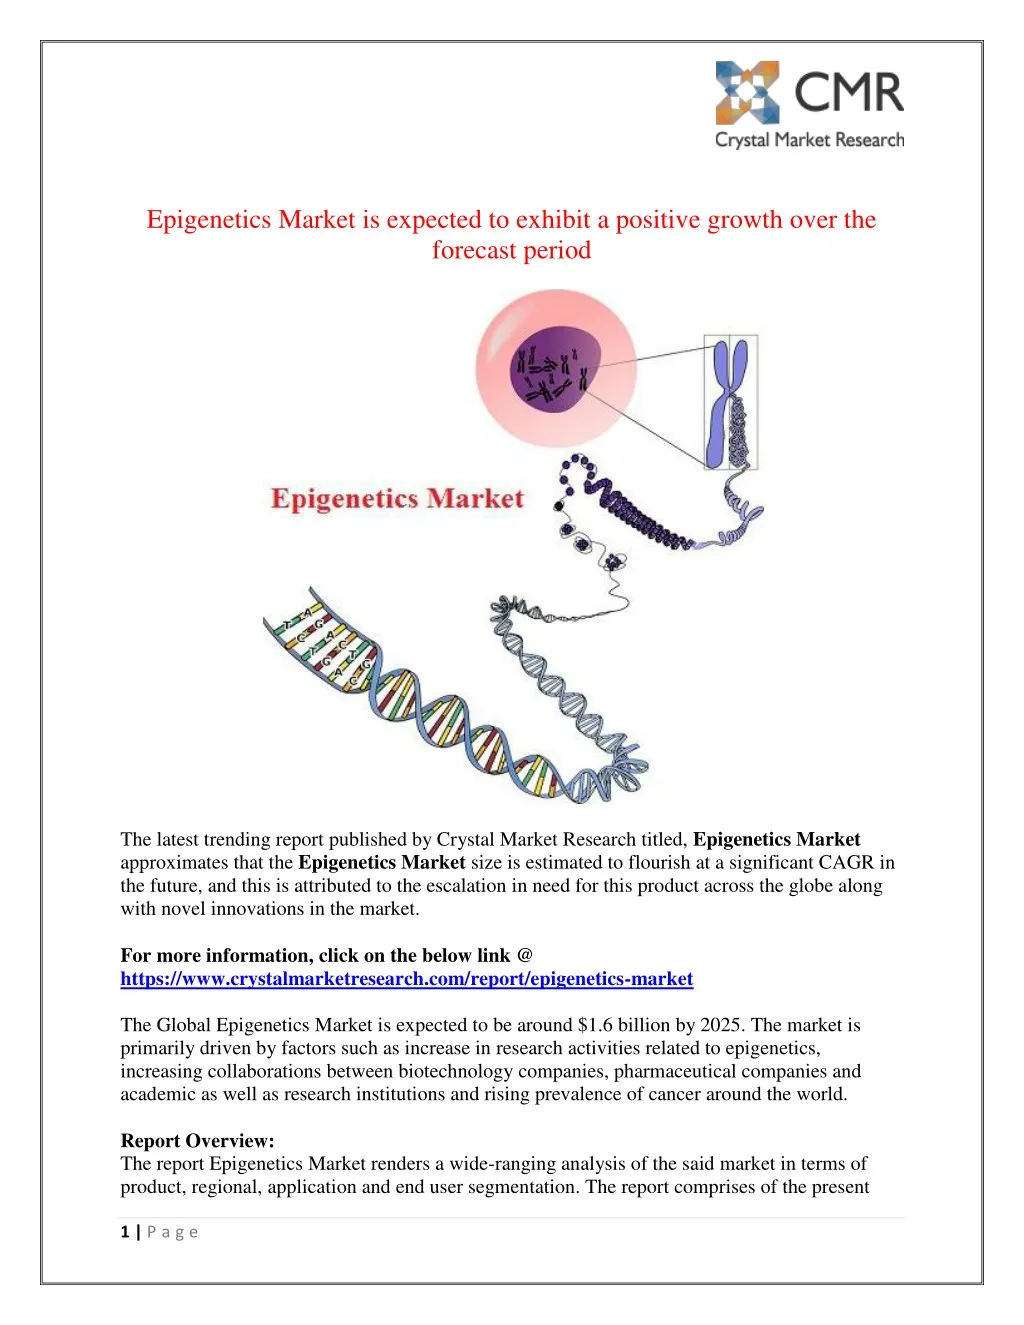 epigenetics market is expected to exhibit